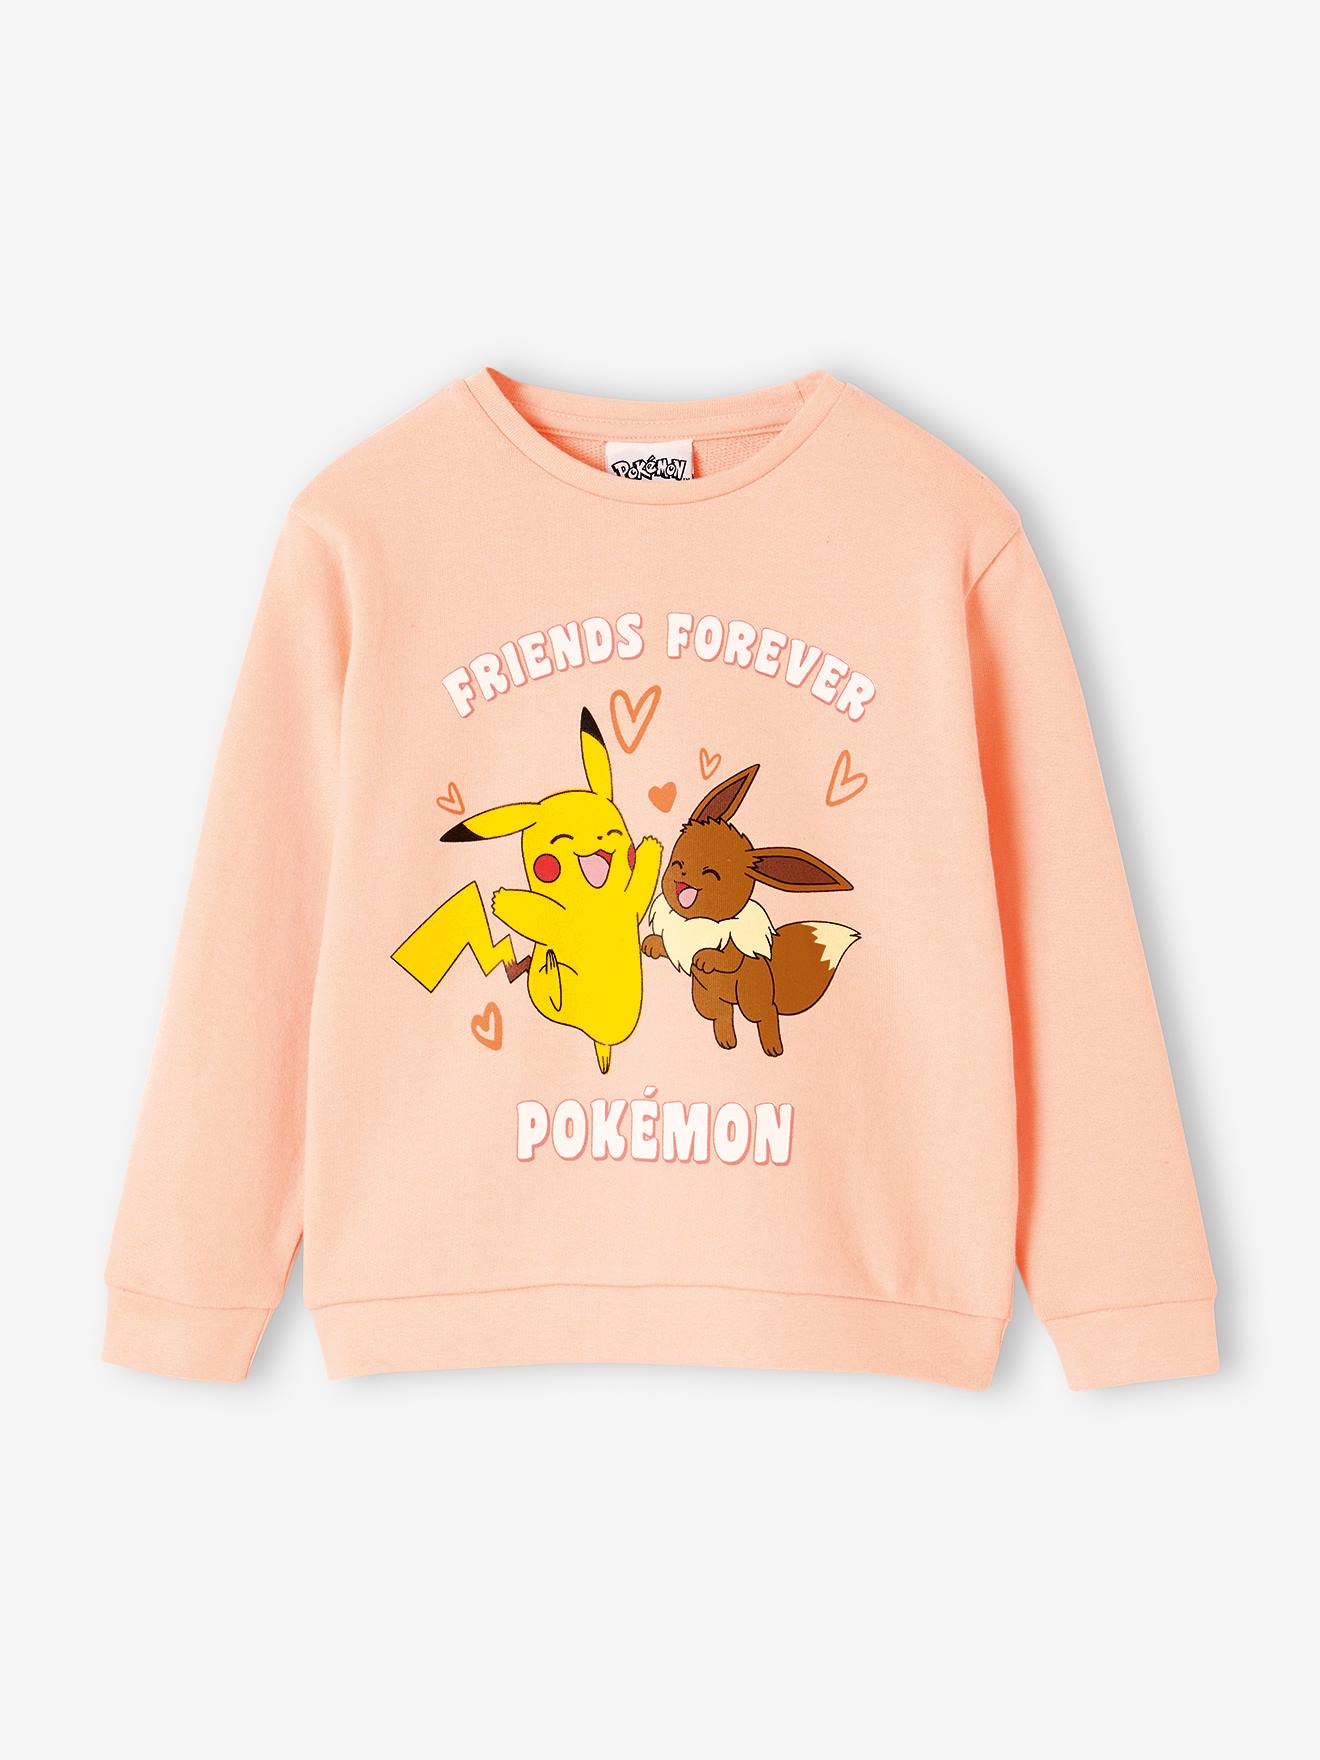 Pokemon(r) Sweatshirt for Girls apricot